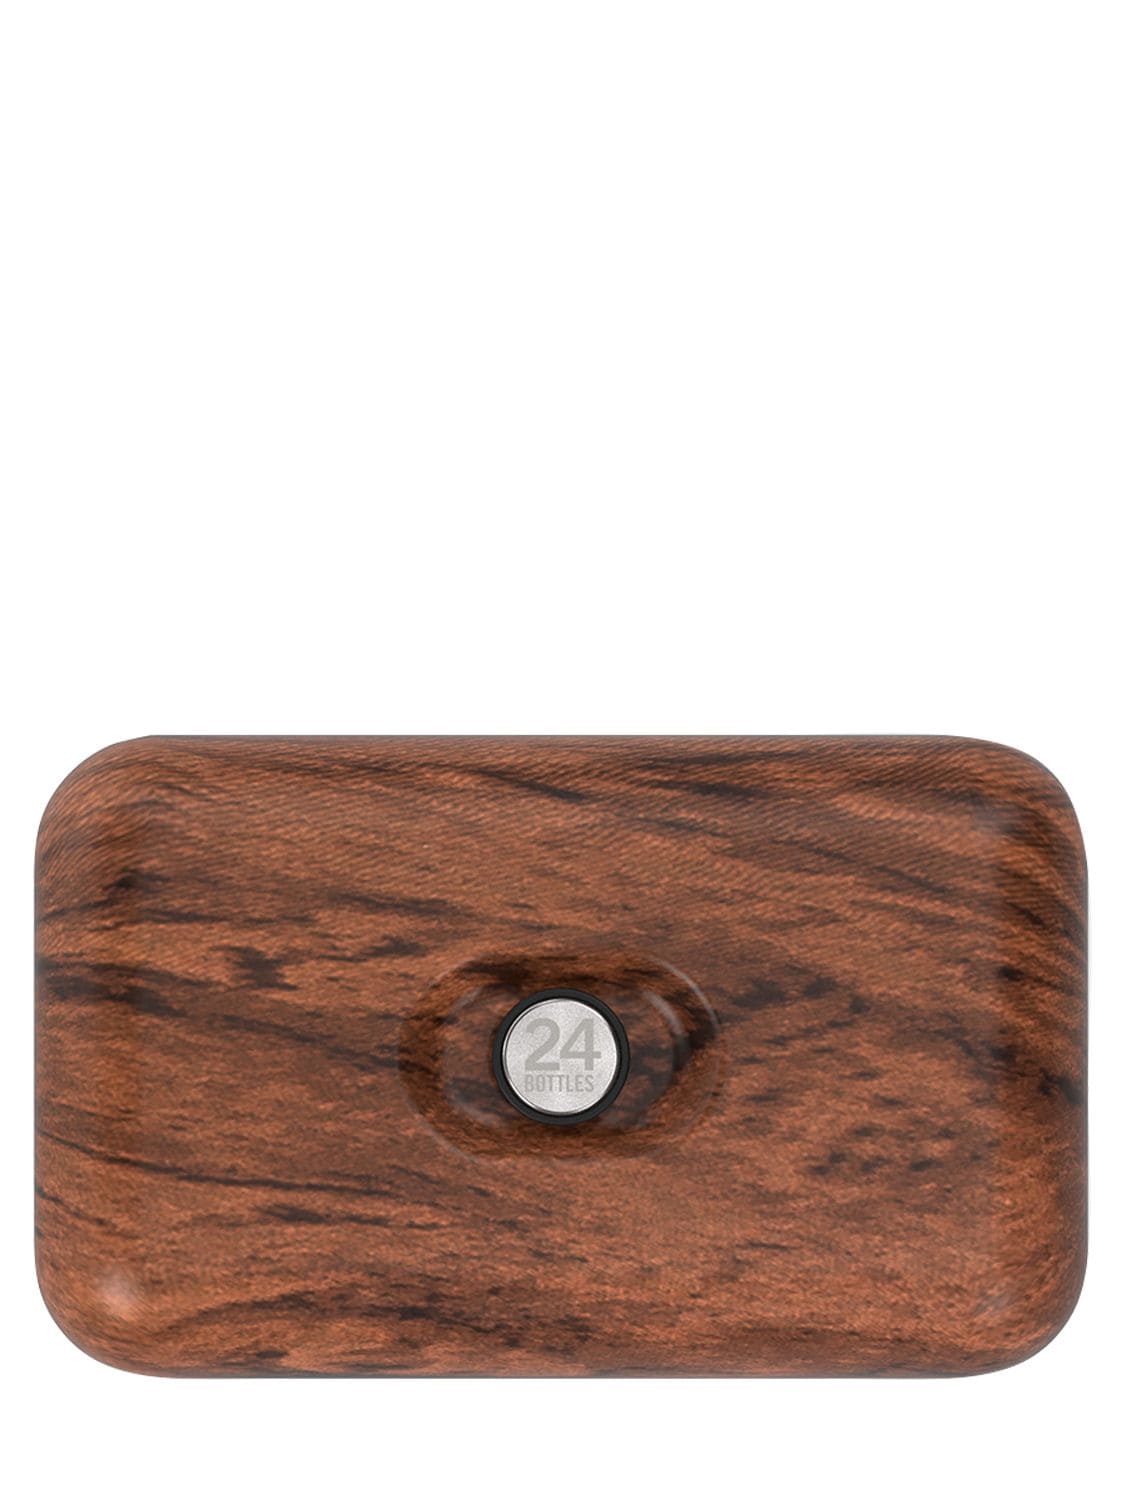 24bottles Sequoia Wood Lunchbox In Brown